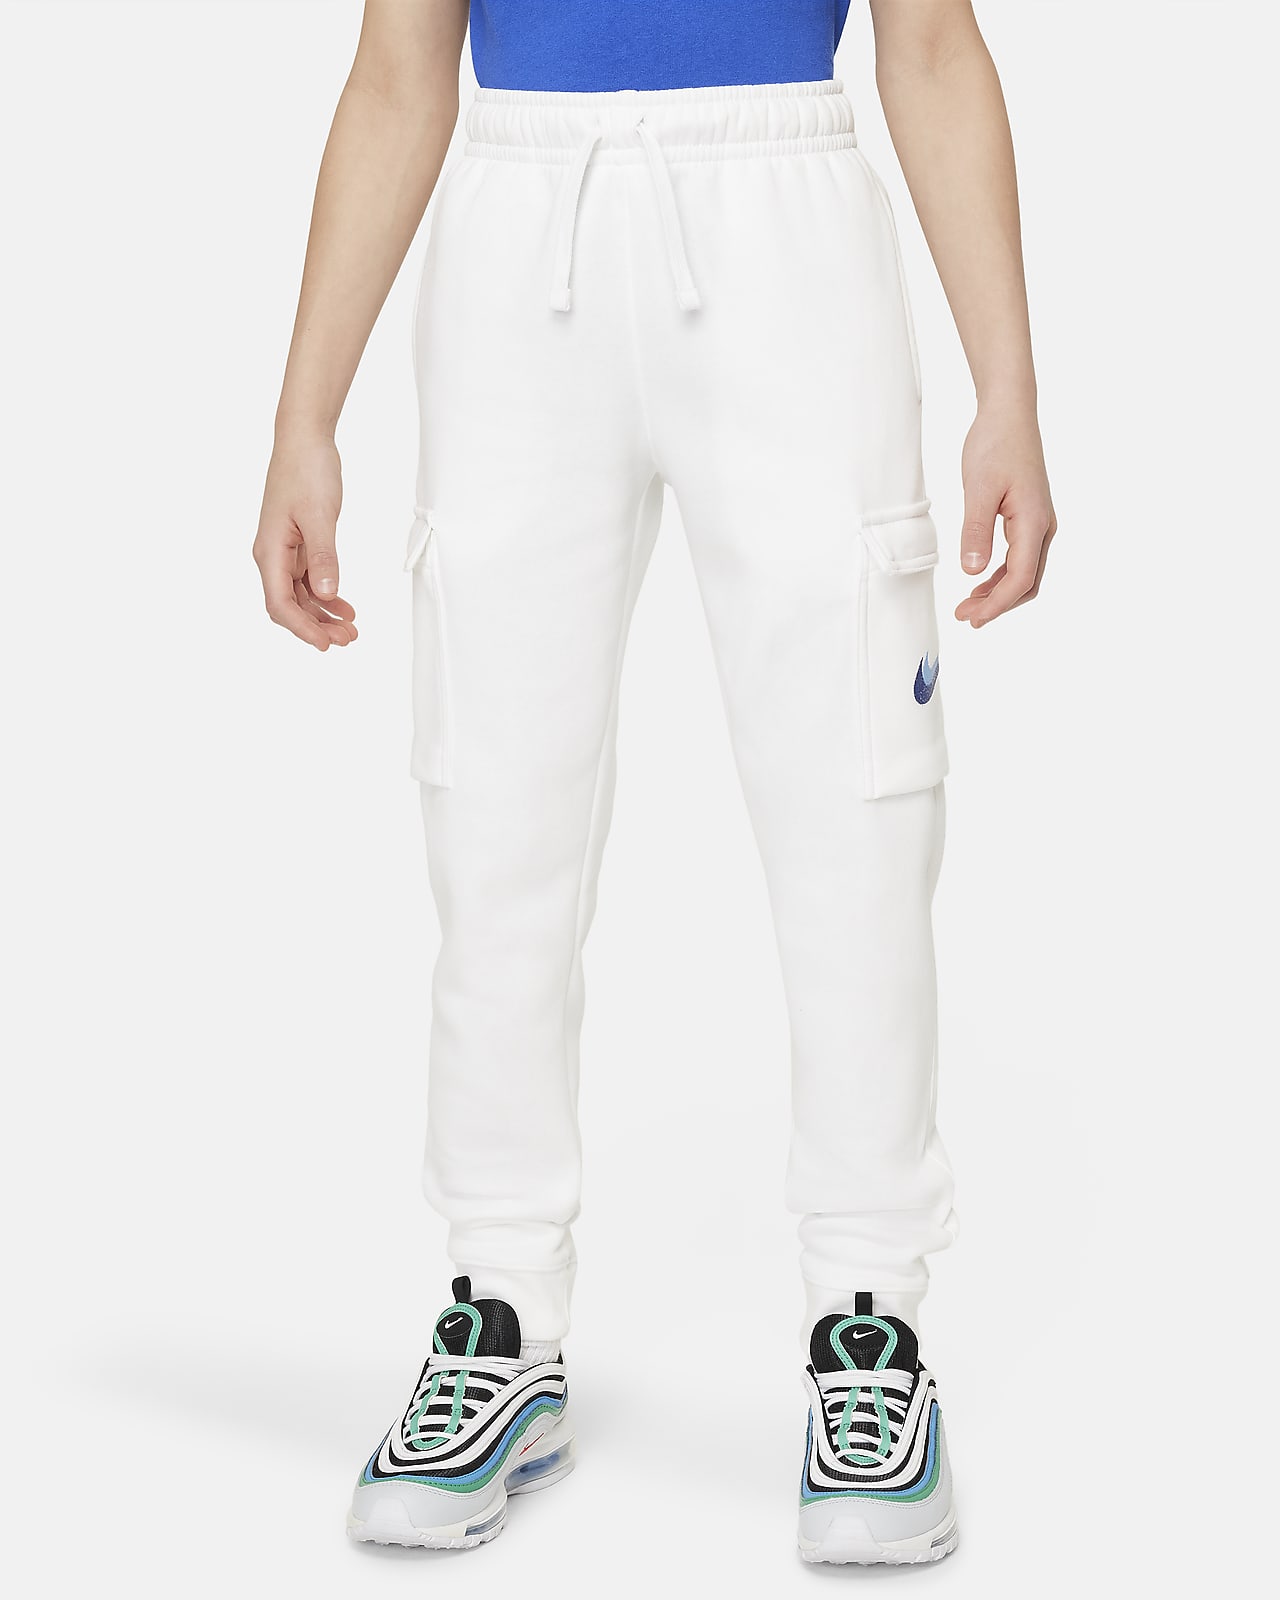 Nike Sportswear Pantalons cargo estampats de teixit Fleece - Nen